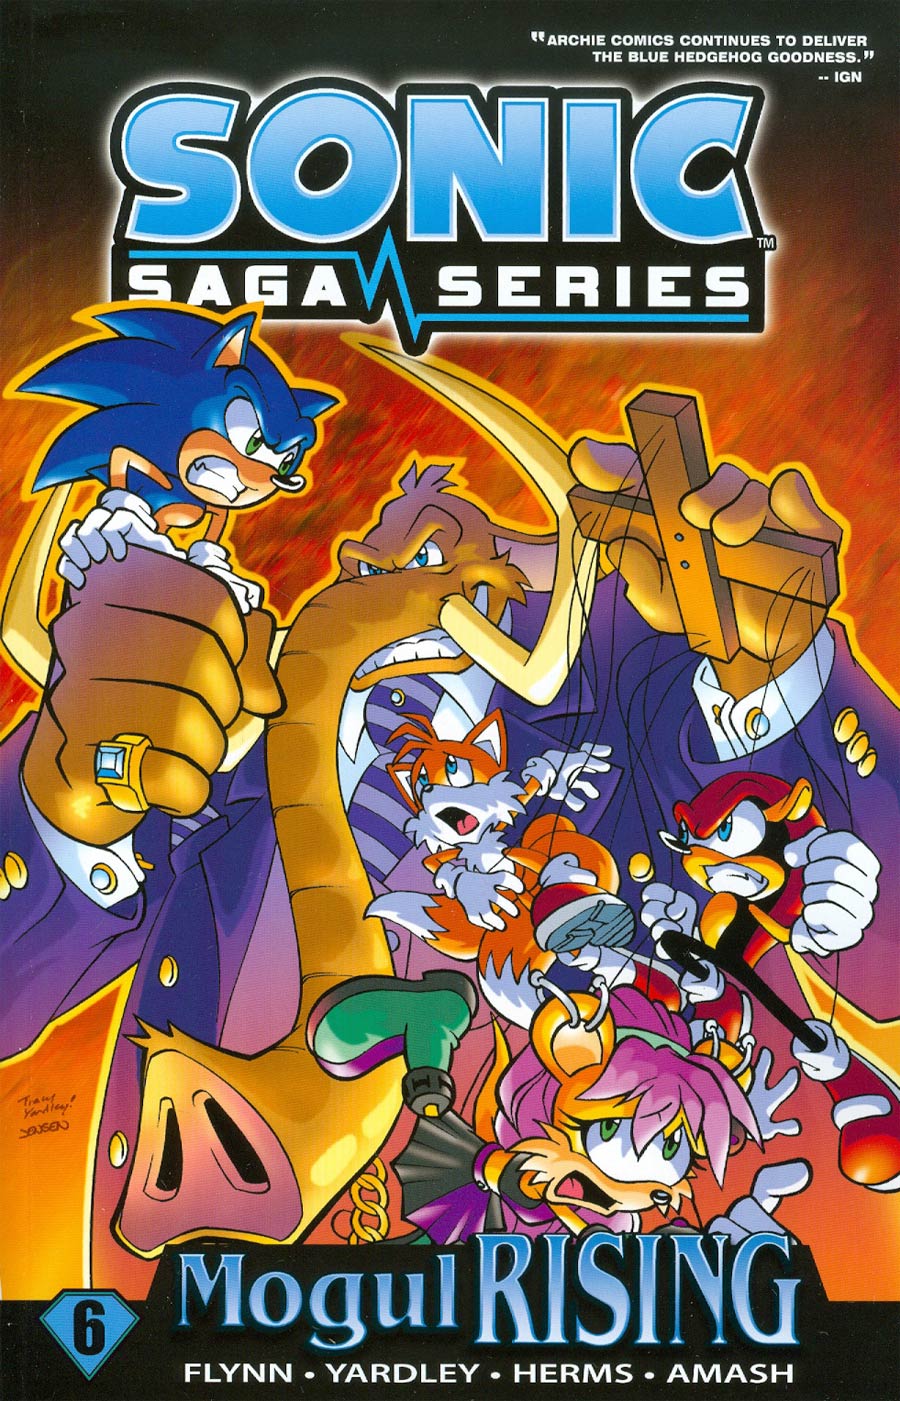 Sonic Saga Series Vol 6 Mogul Rising TP